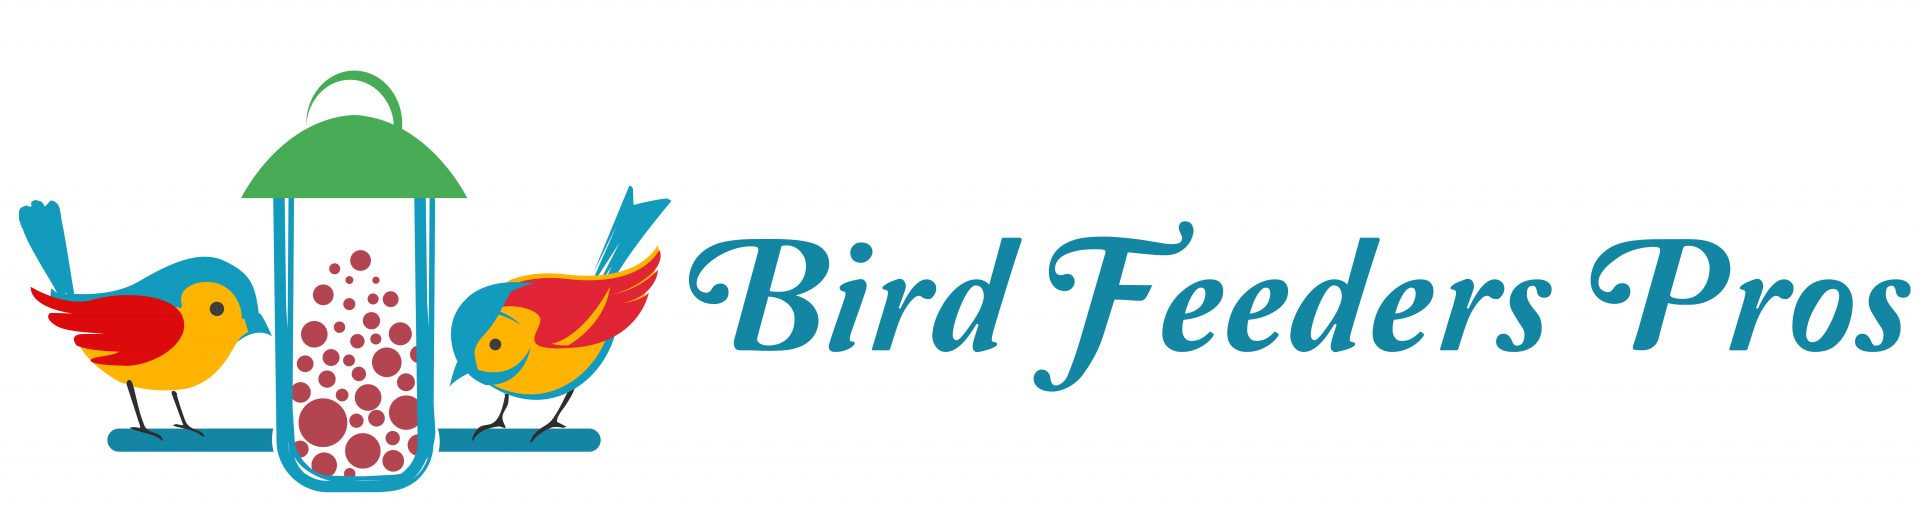 Bird Feeders Pros